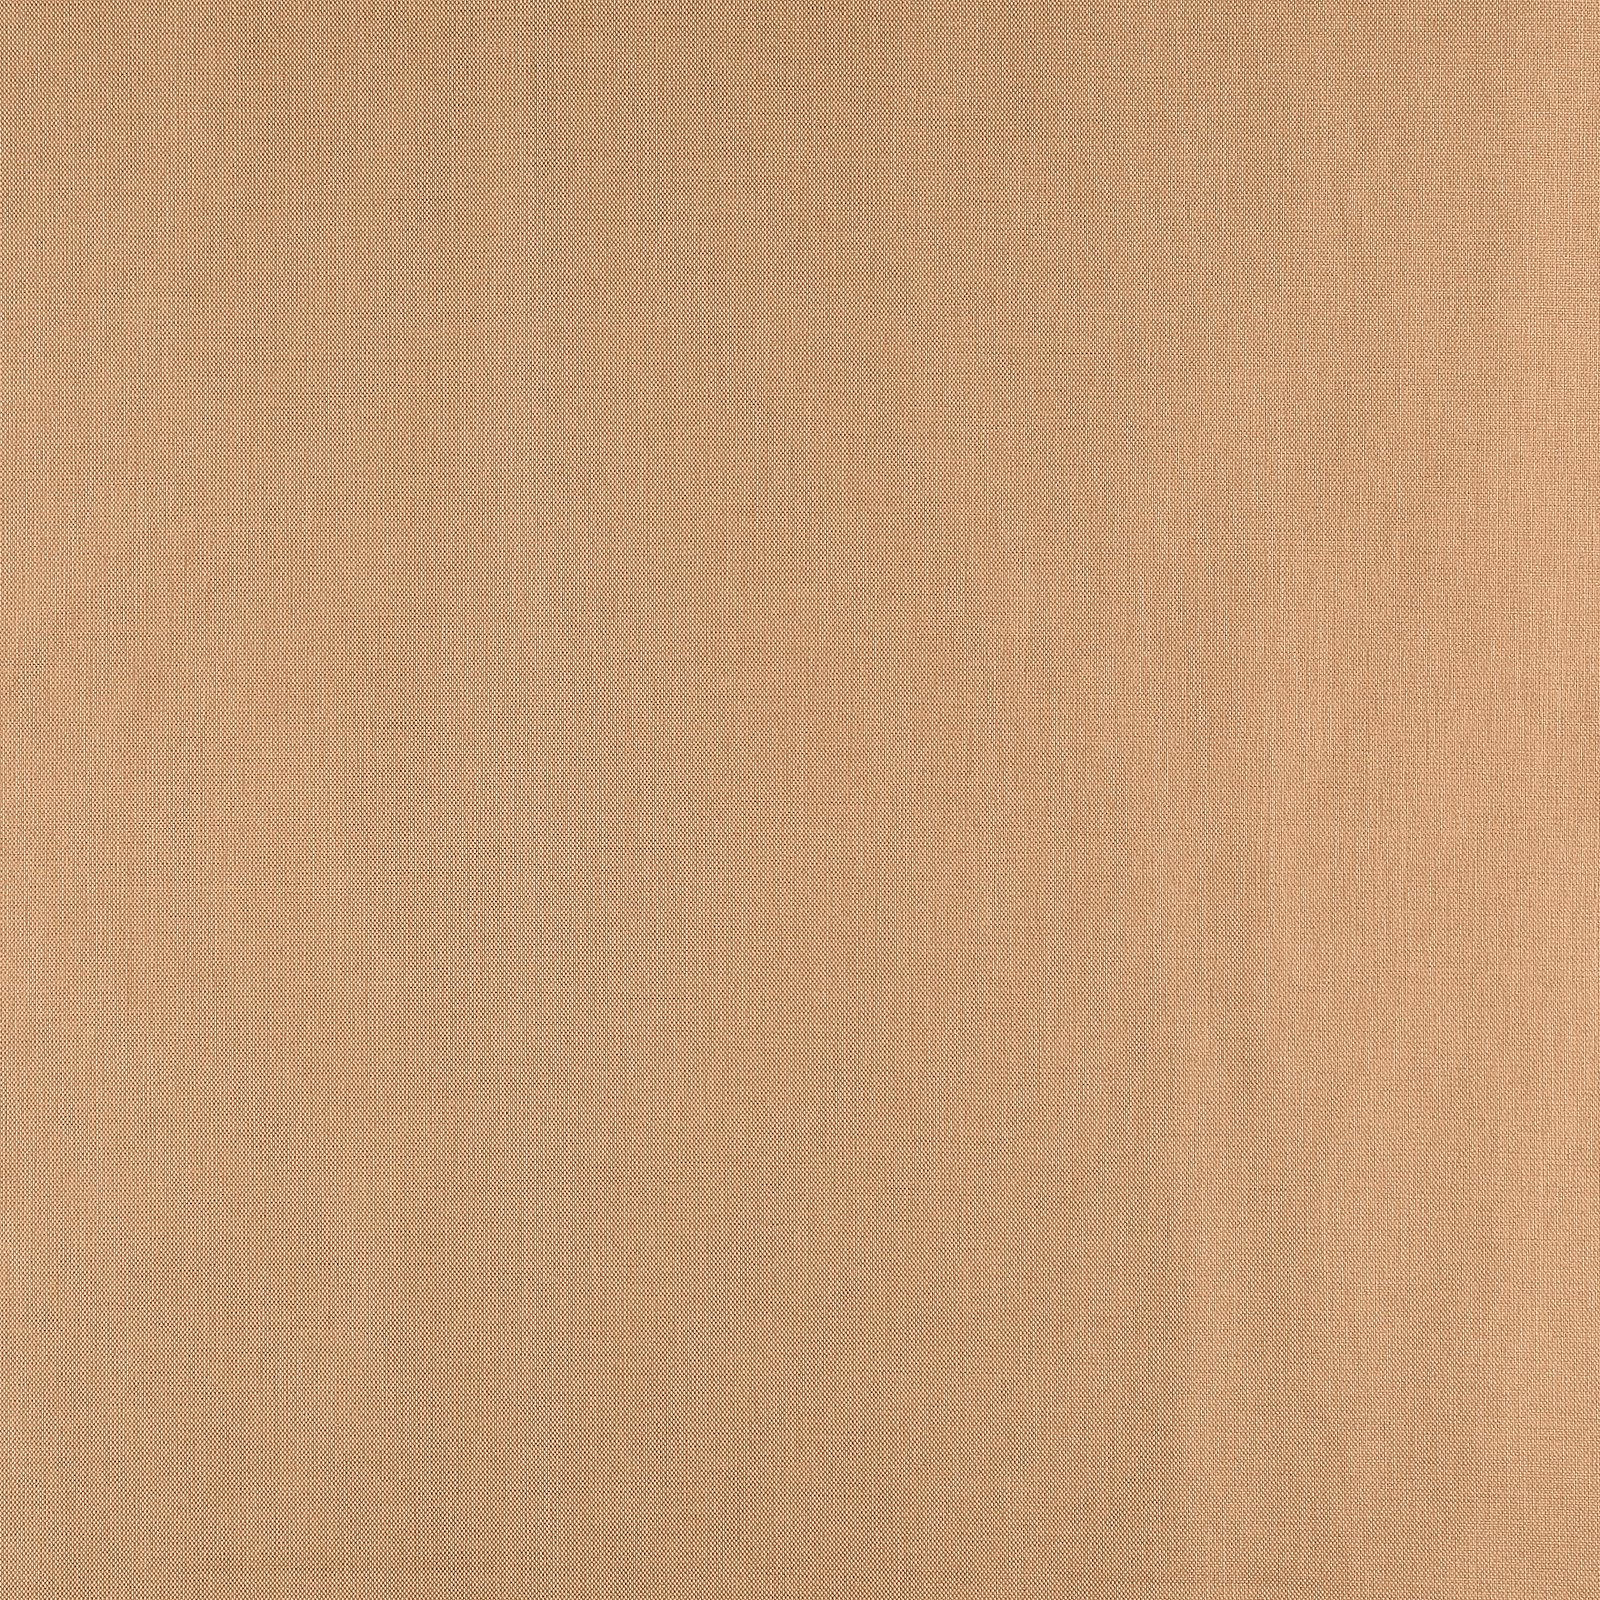 Upholstery fabric light terracotta mel. 826219_pack_solid